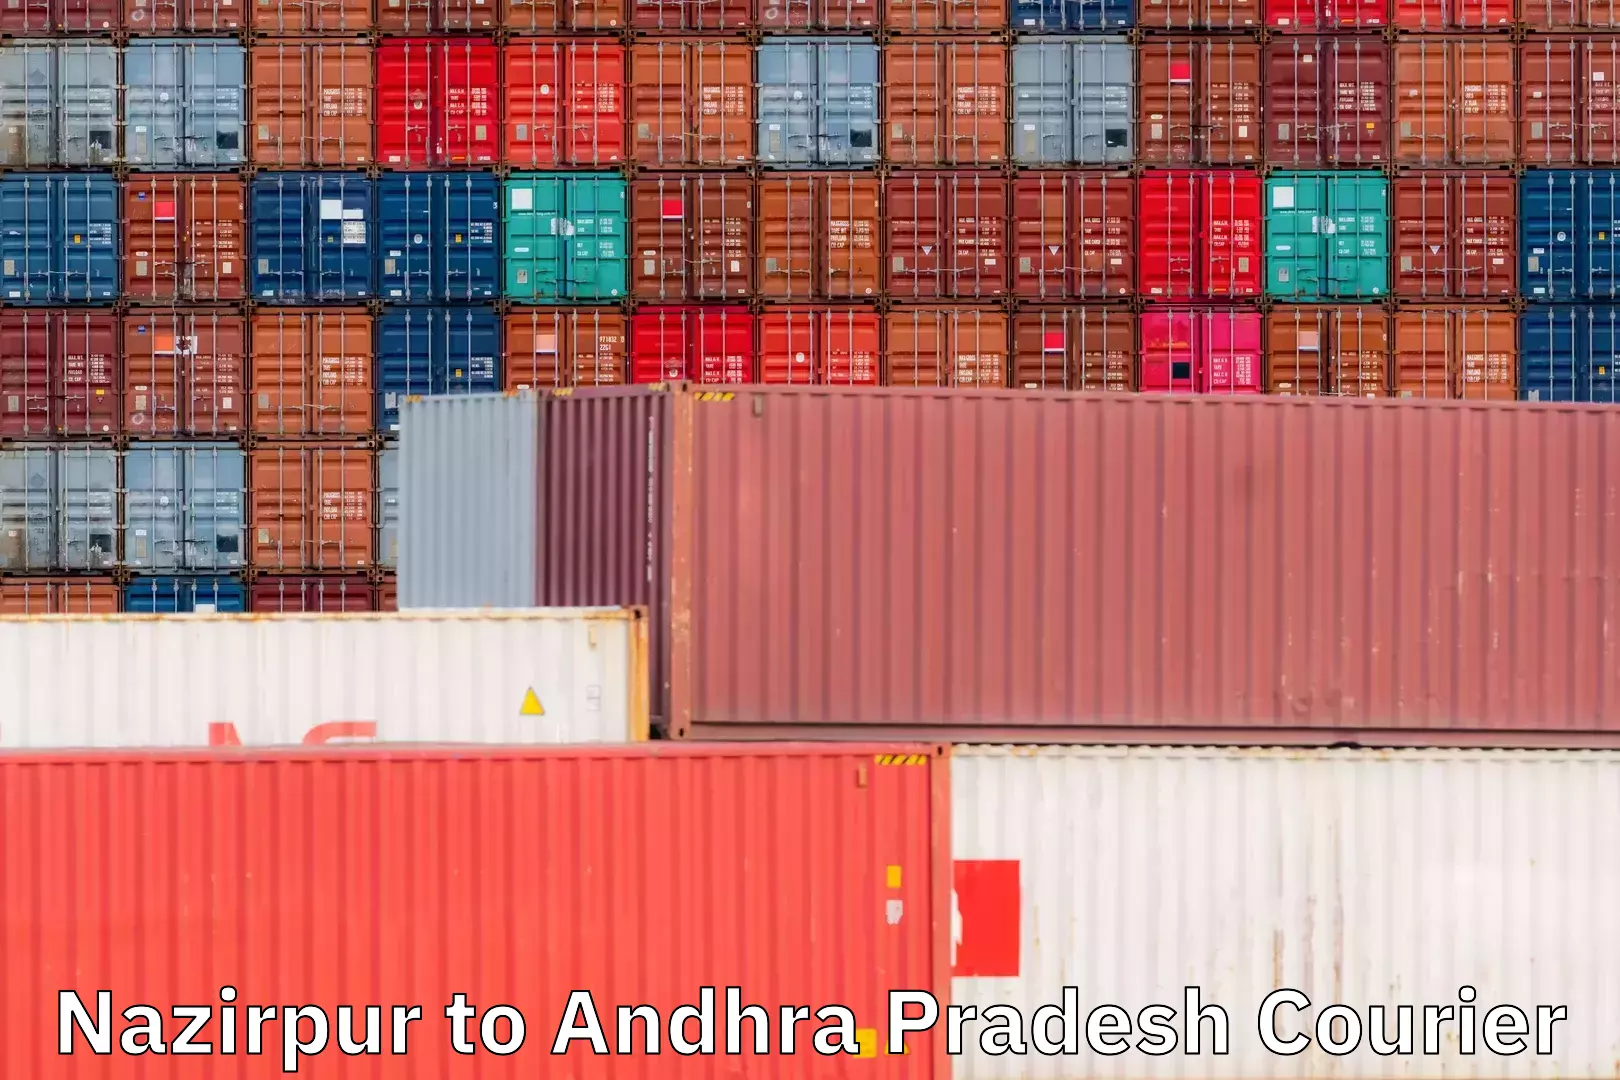 Logistics and distribution Nazirpur to Visakhapatnam Port